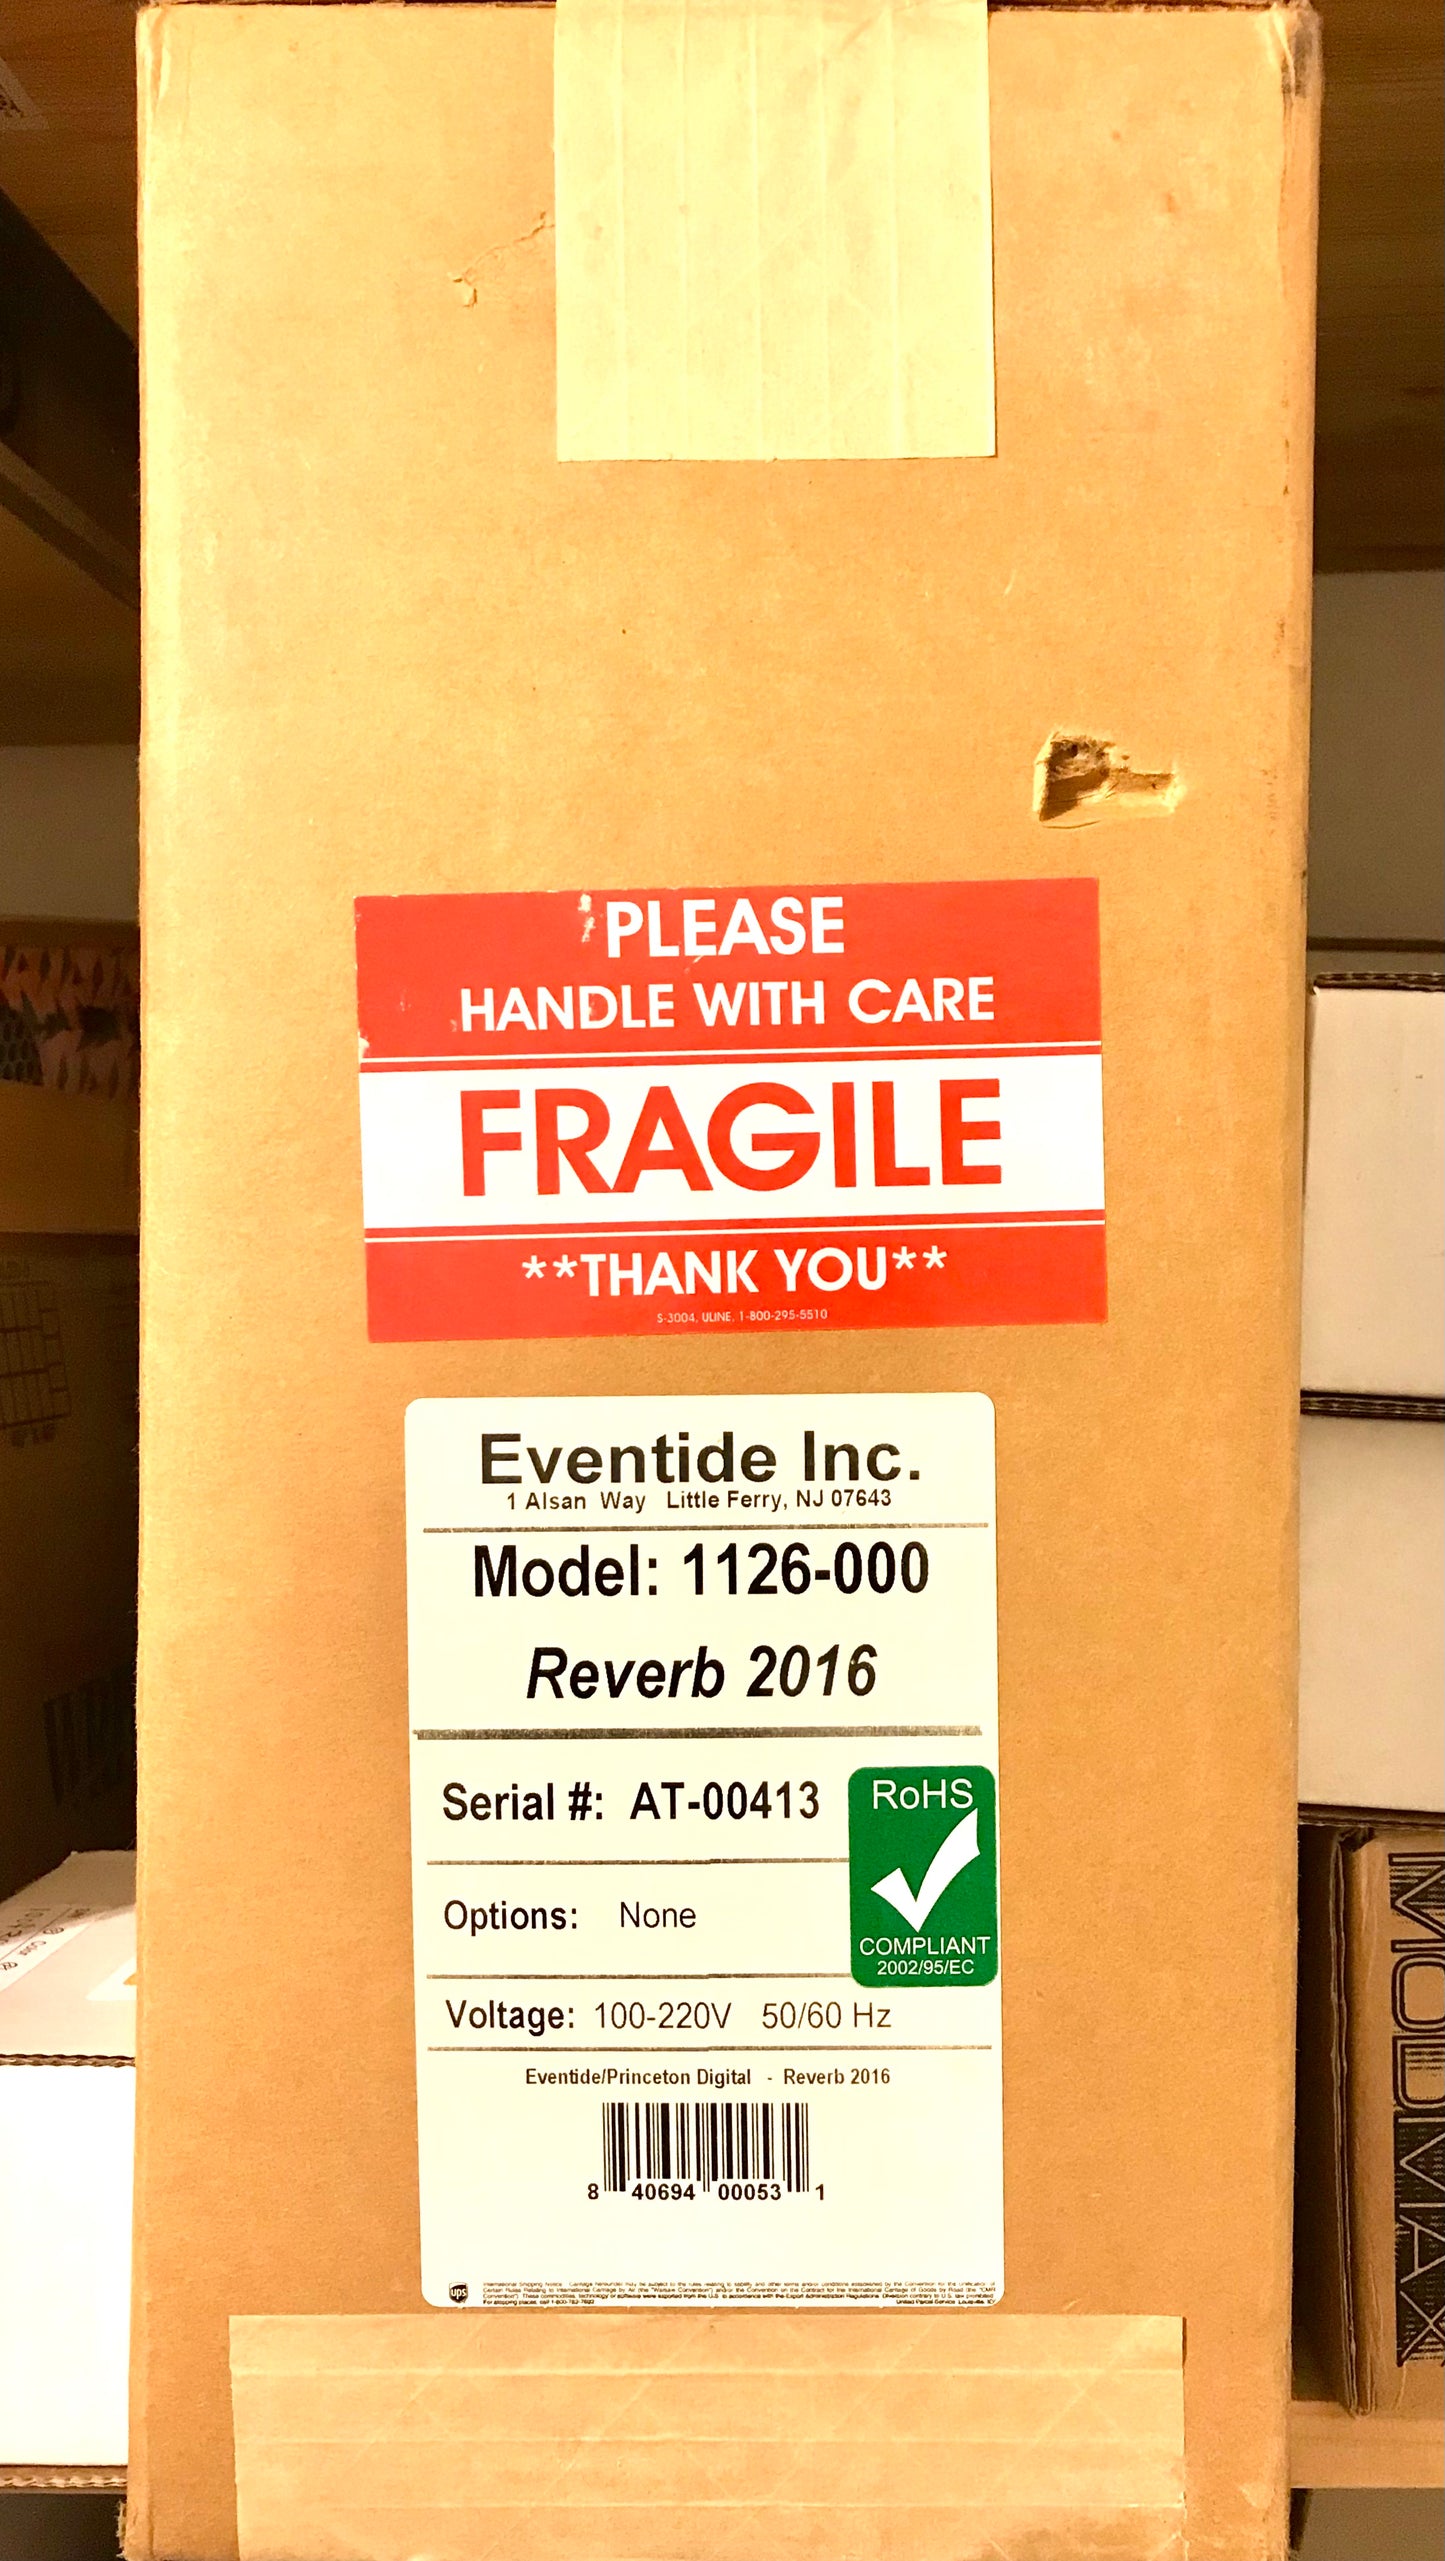 Reverb 2016, brand new, old stock, still sealed factory carton!